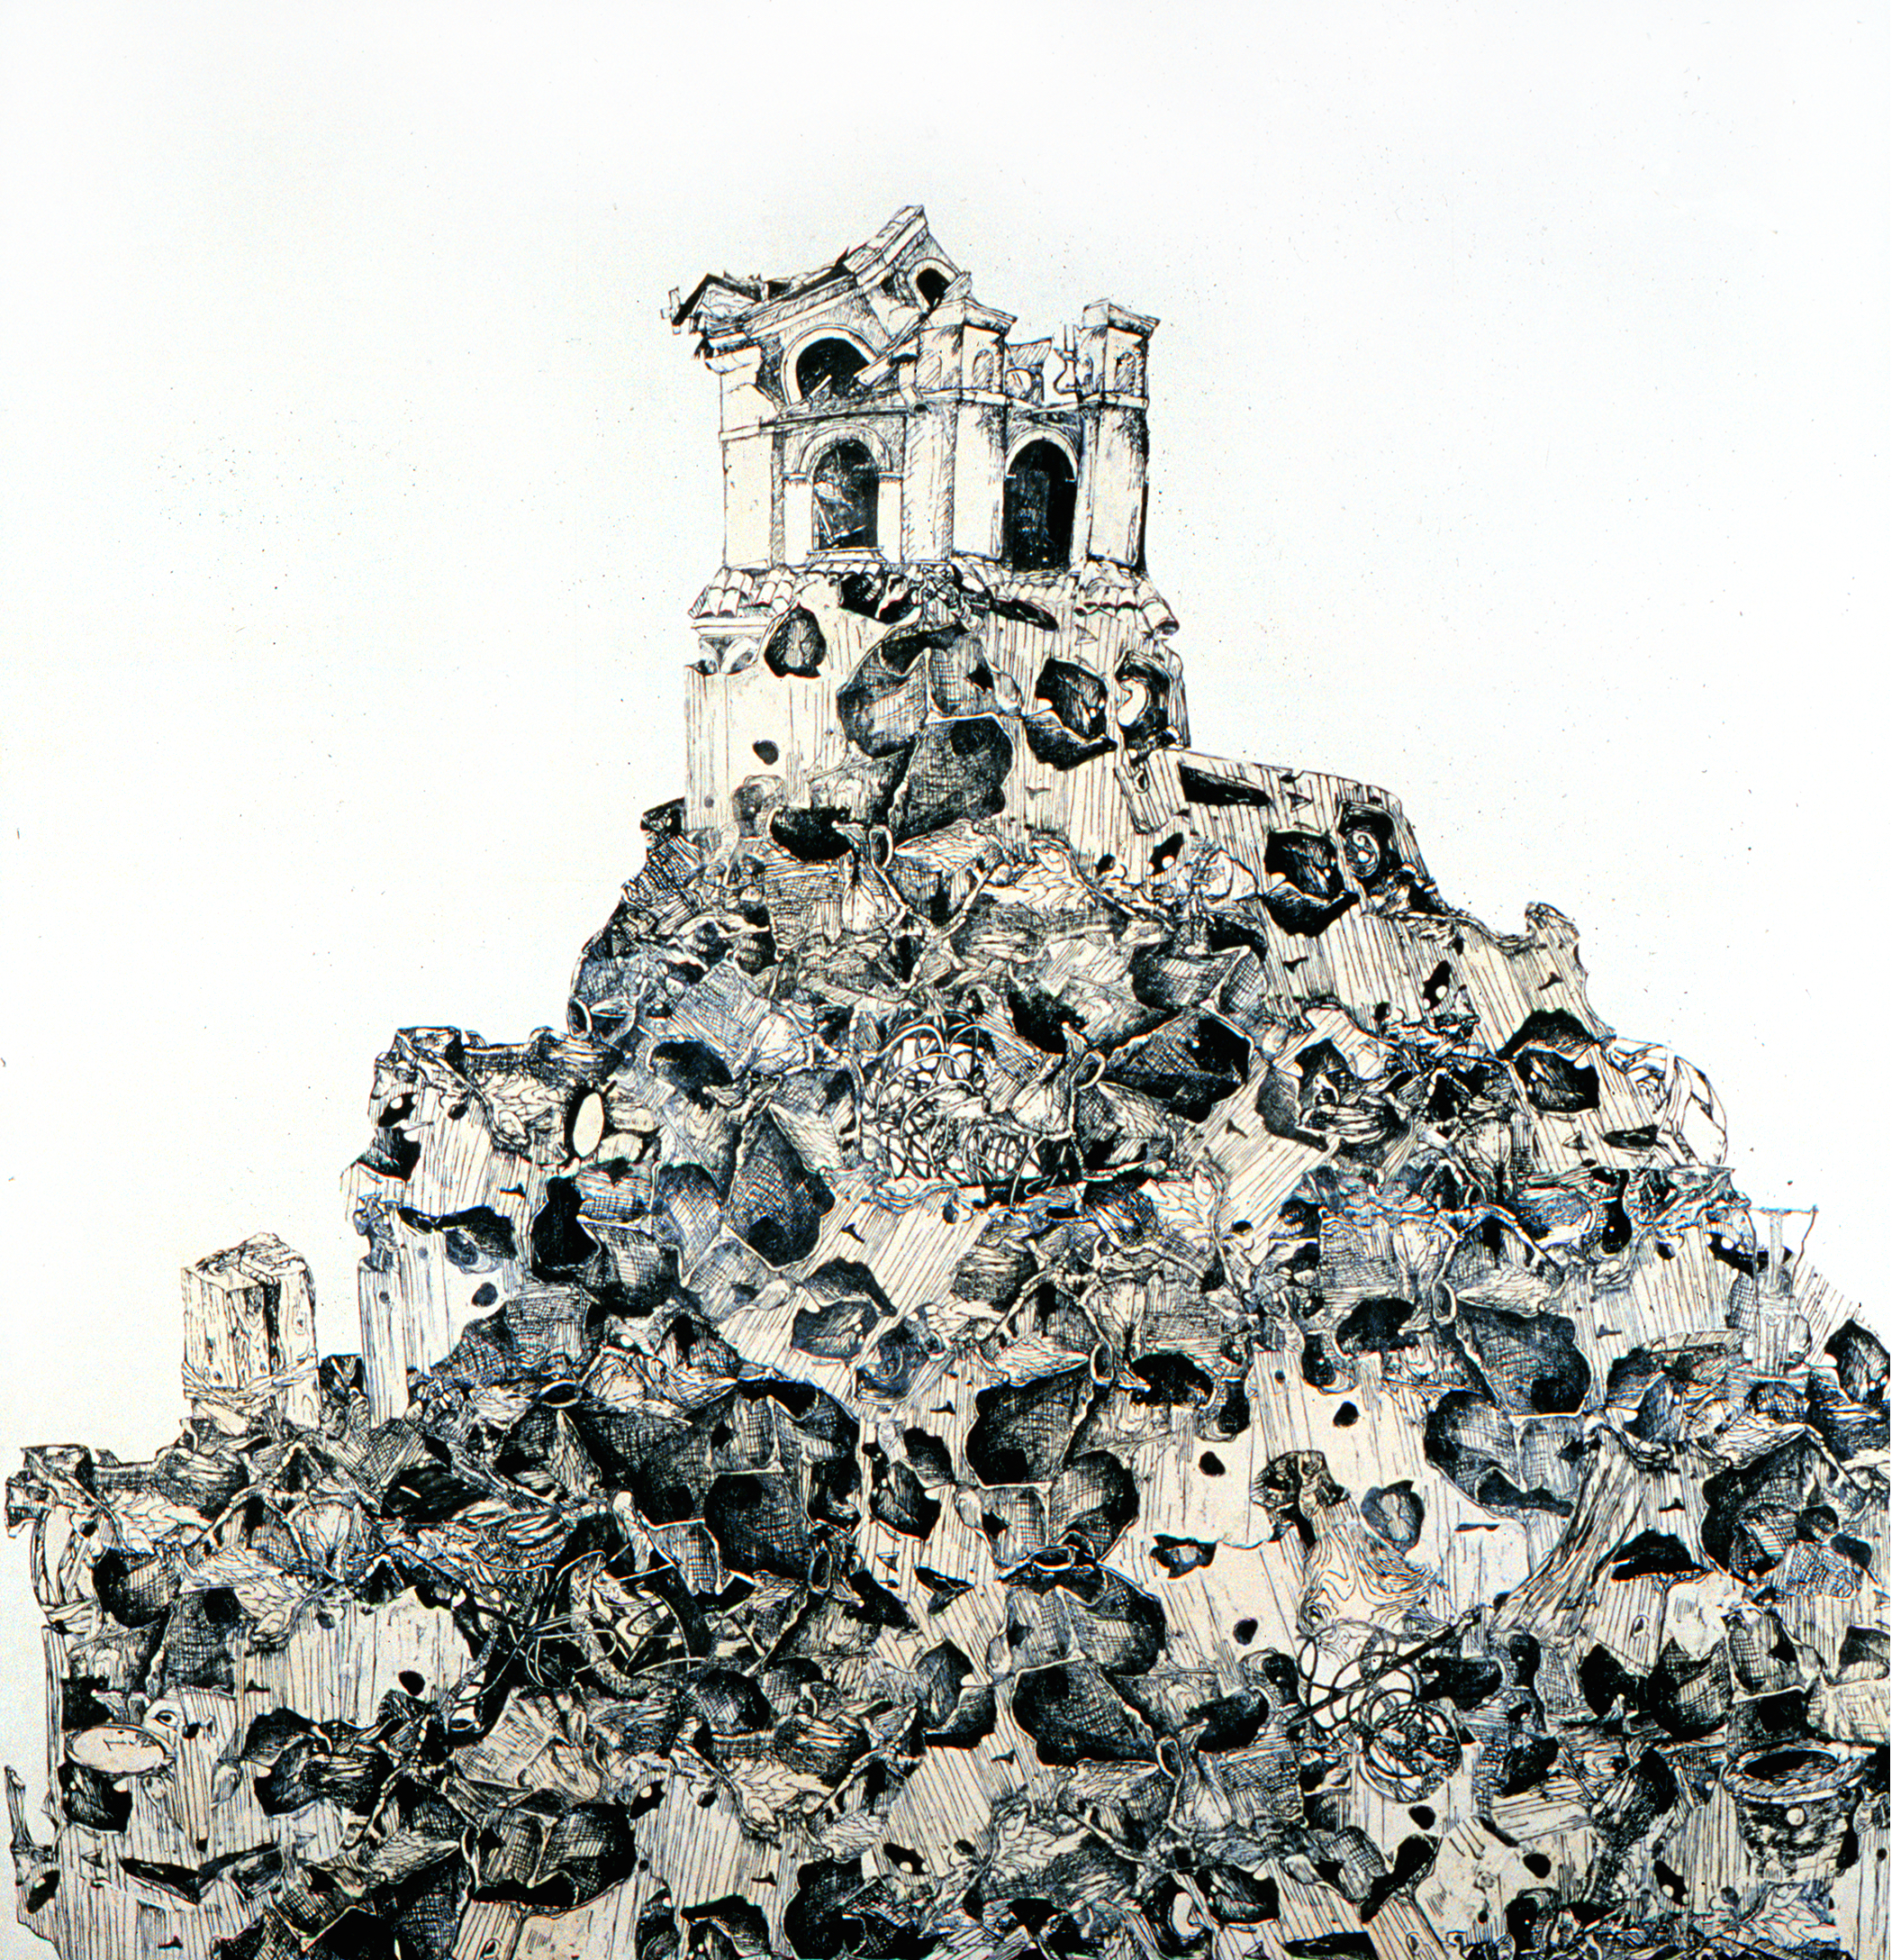  Tower  woodblock prints on kozo paper on wood panel  60" x 57"  2000    